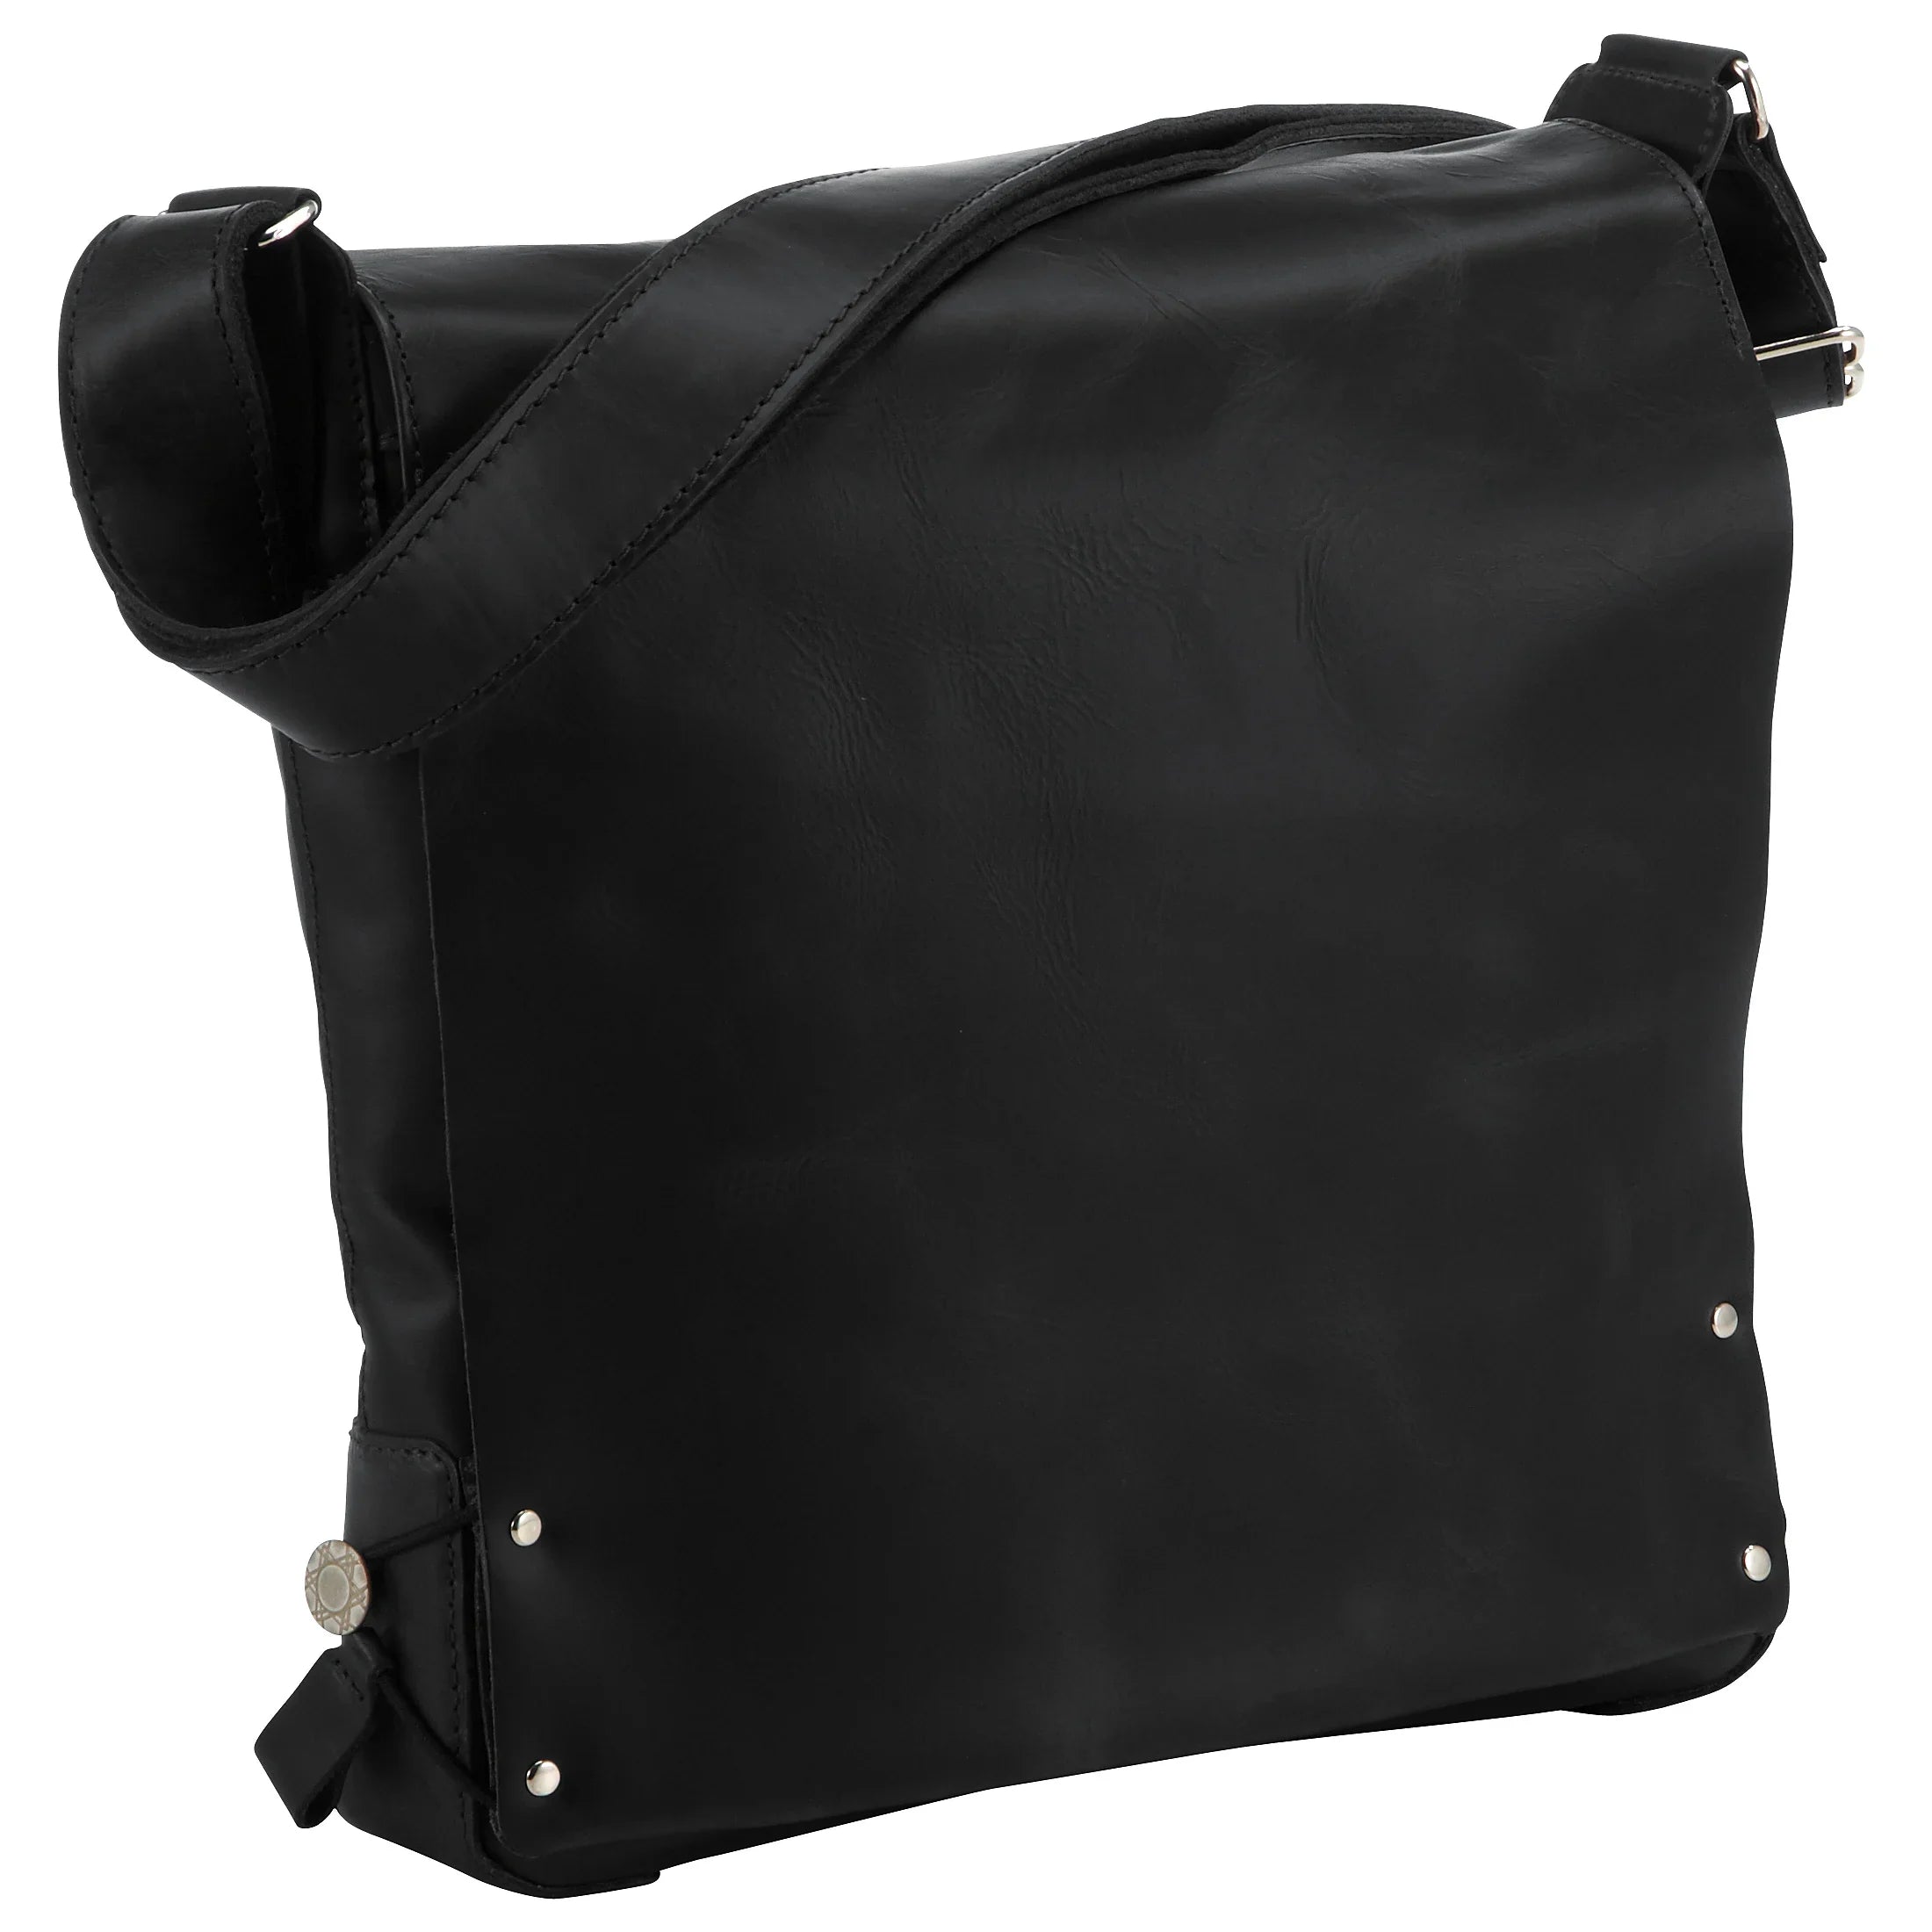 Harolds Jil sac bandoulière en cuir 29 cm - noir